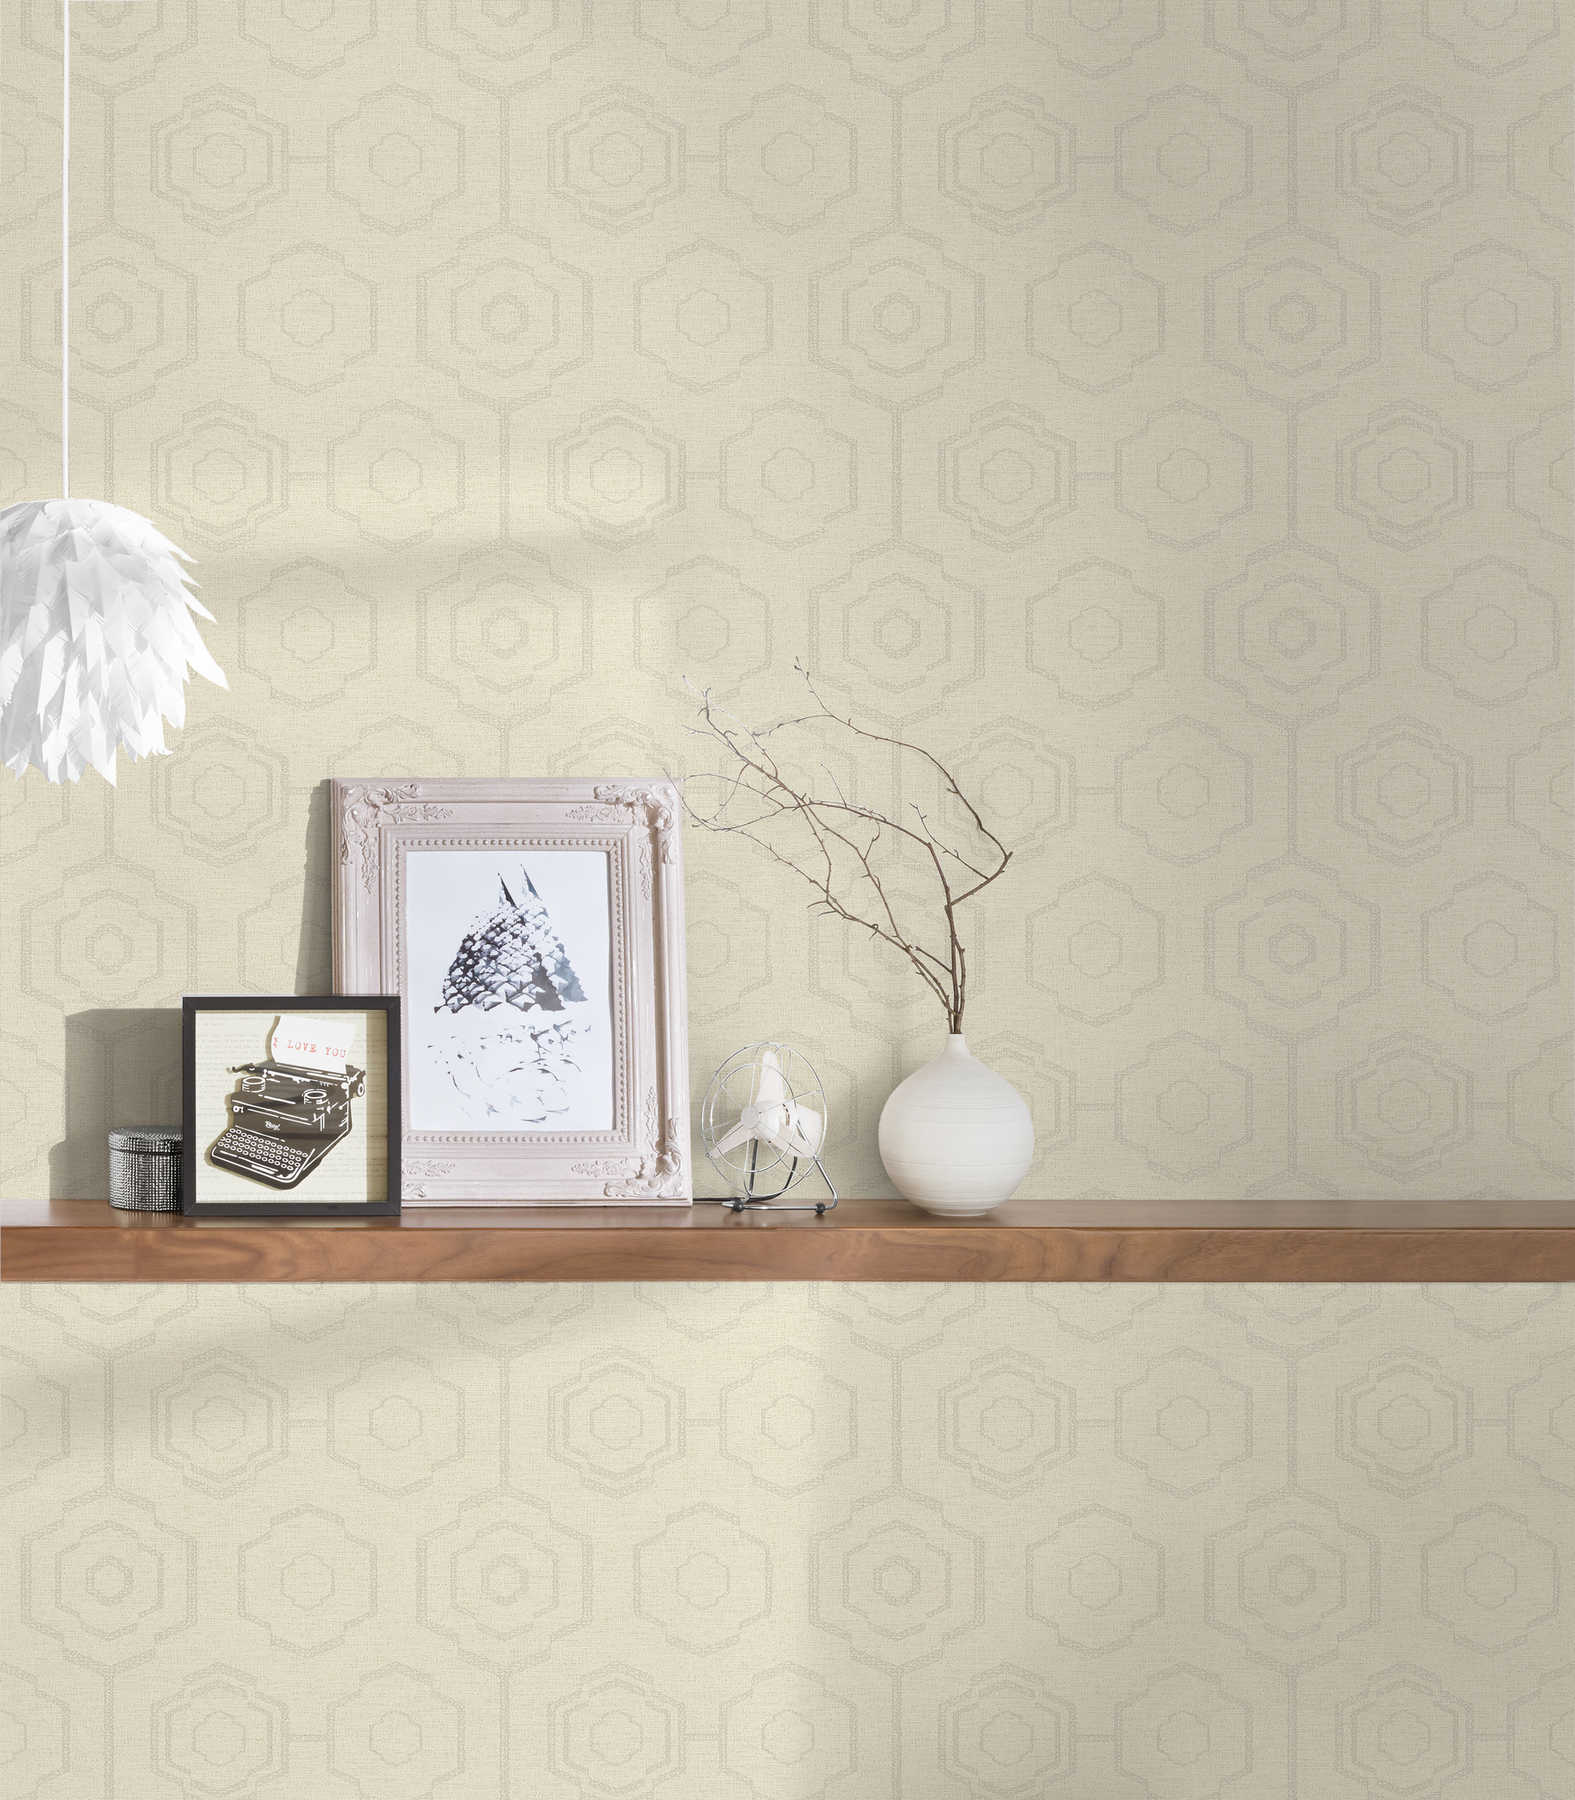             Textile optics wallpaper geometric design & gloss effect - cream, grey, beige
        